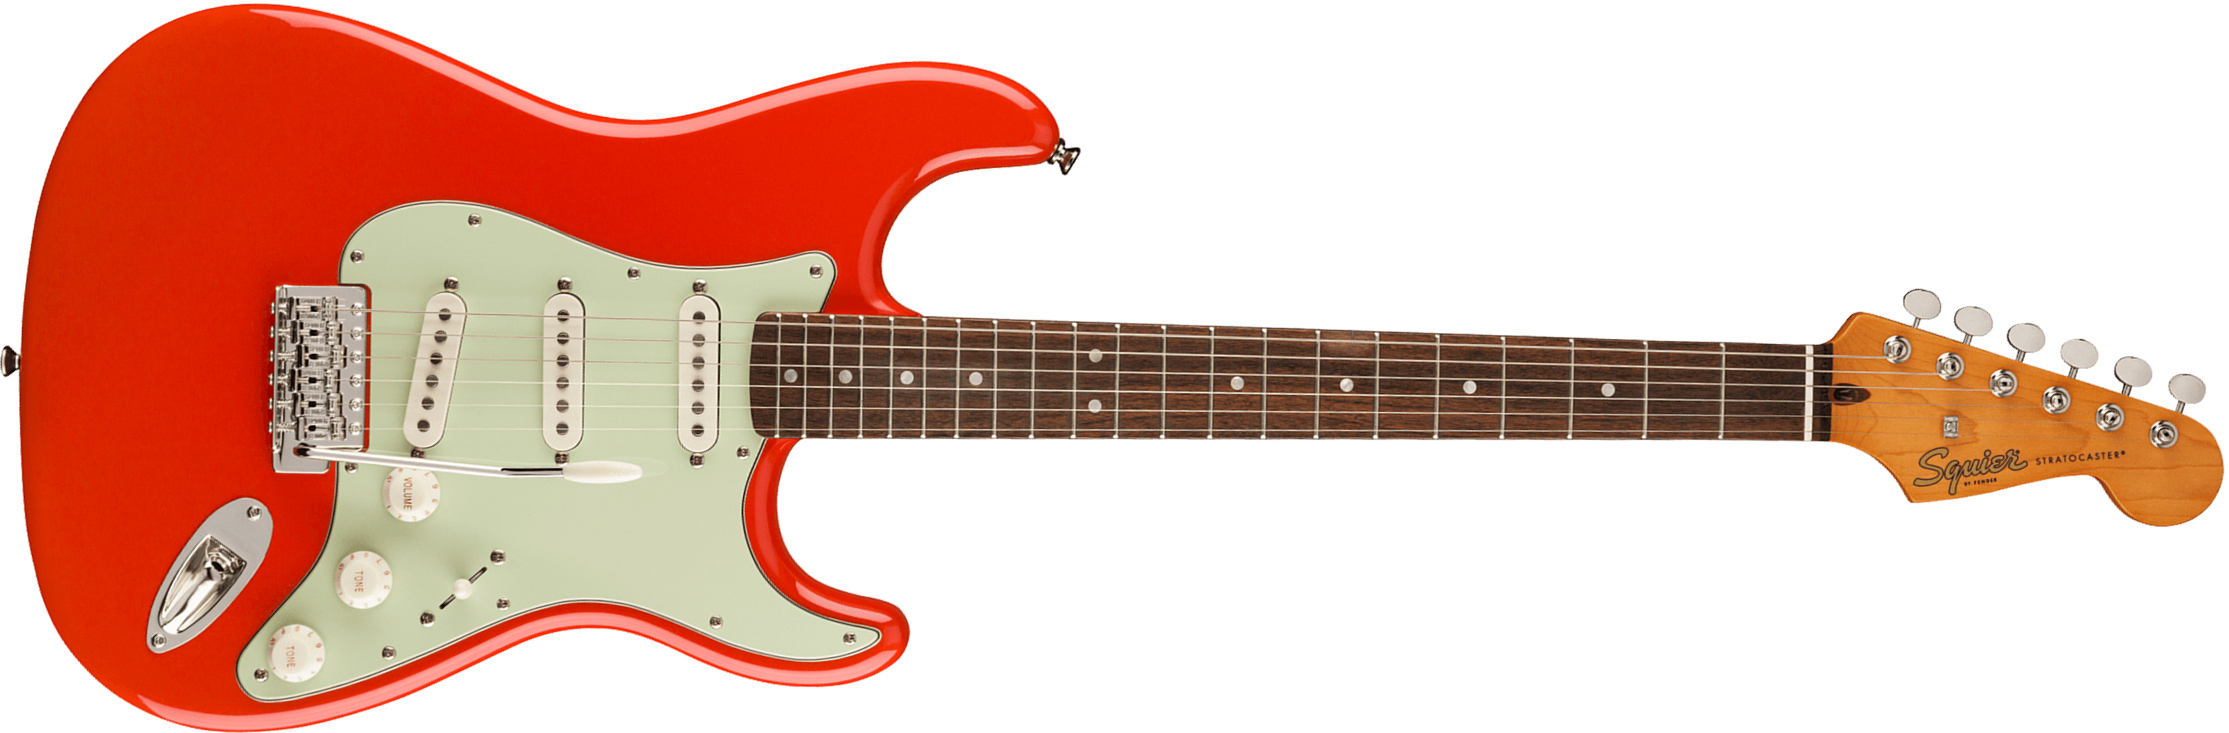 Squier Strat '60s Classic Vibe Fsr Ltd Lau - Fiesta Red - Str shape electric guitar - Main picture